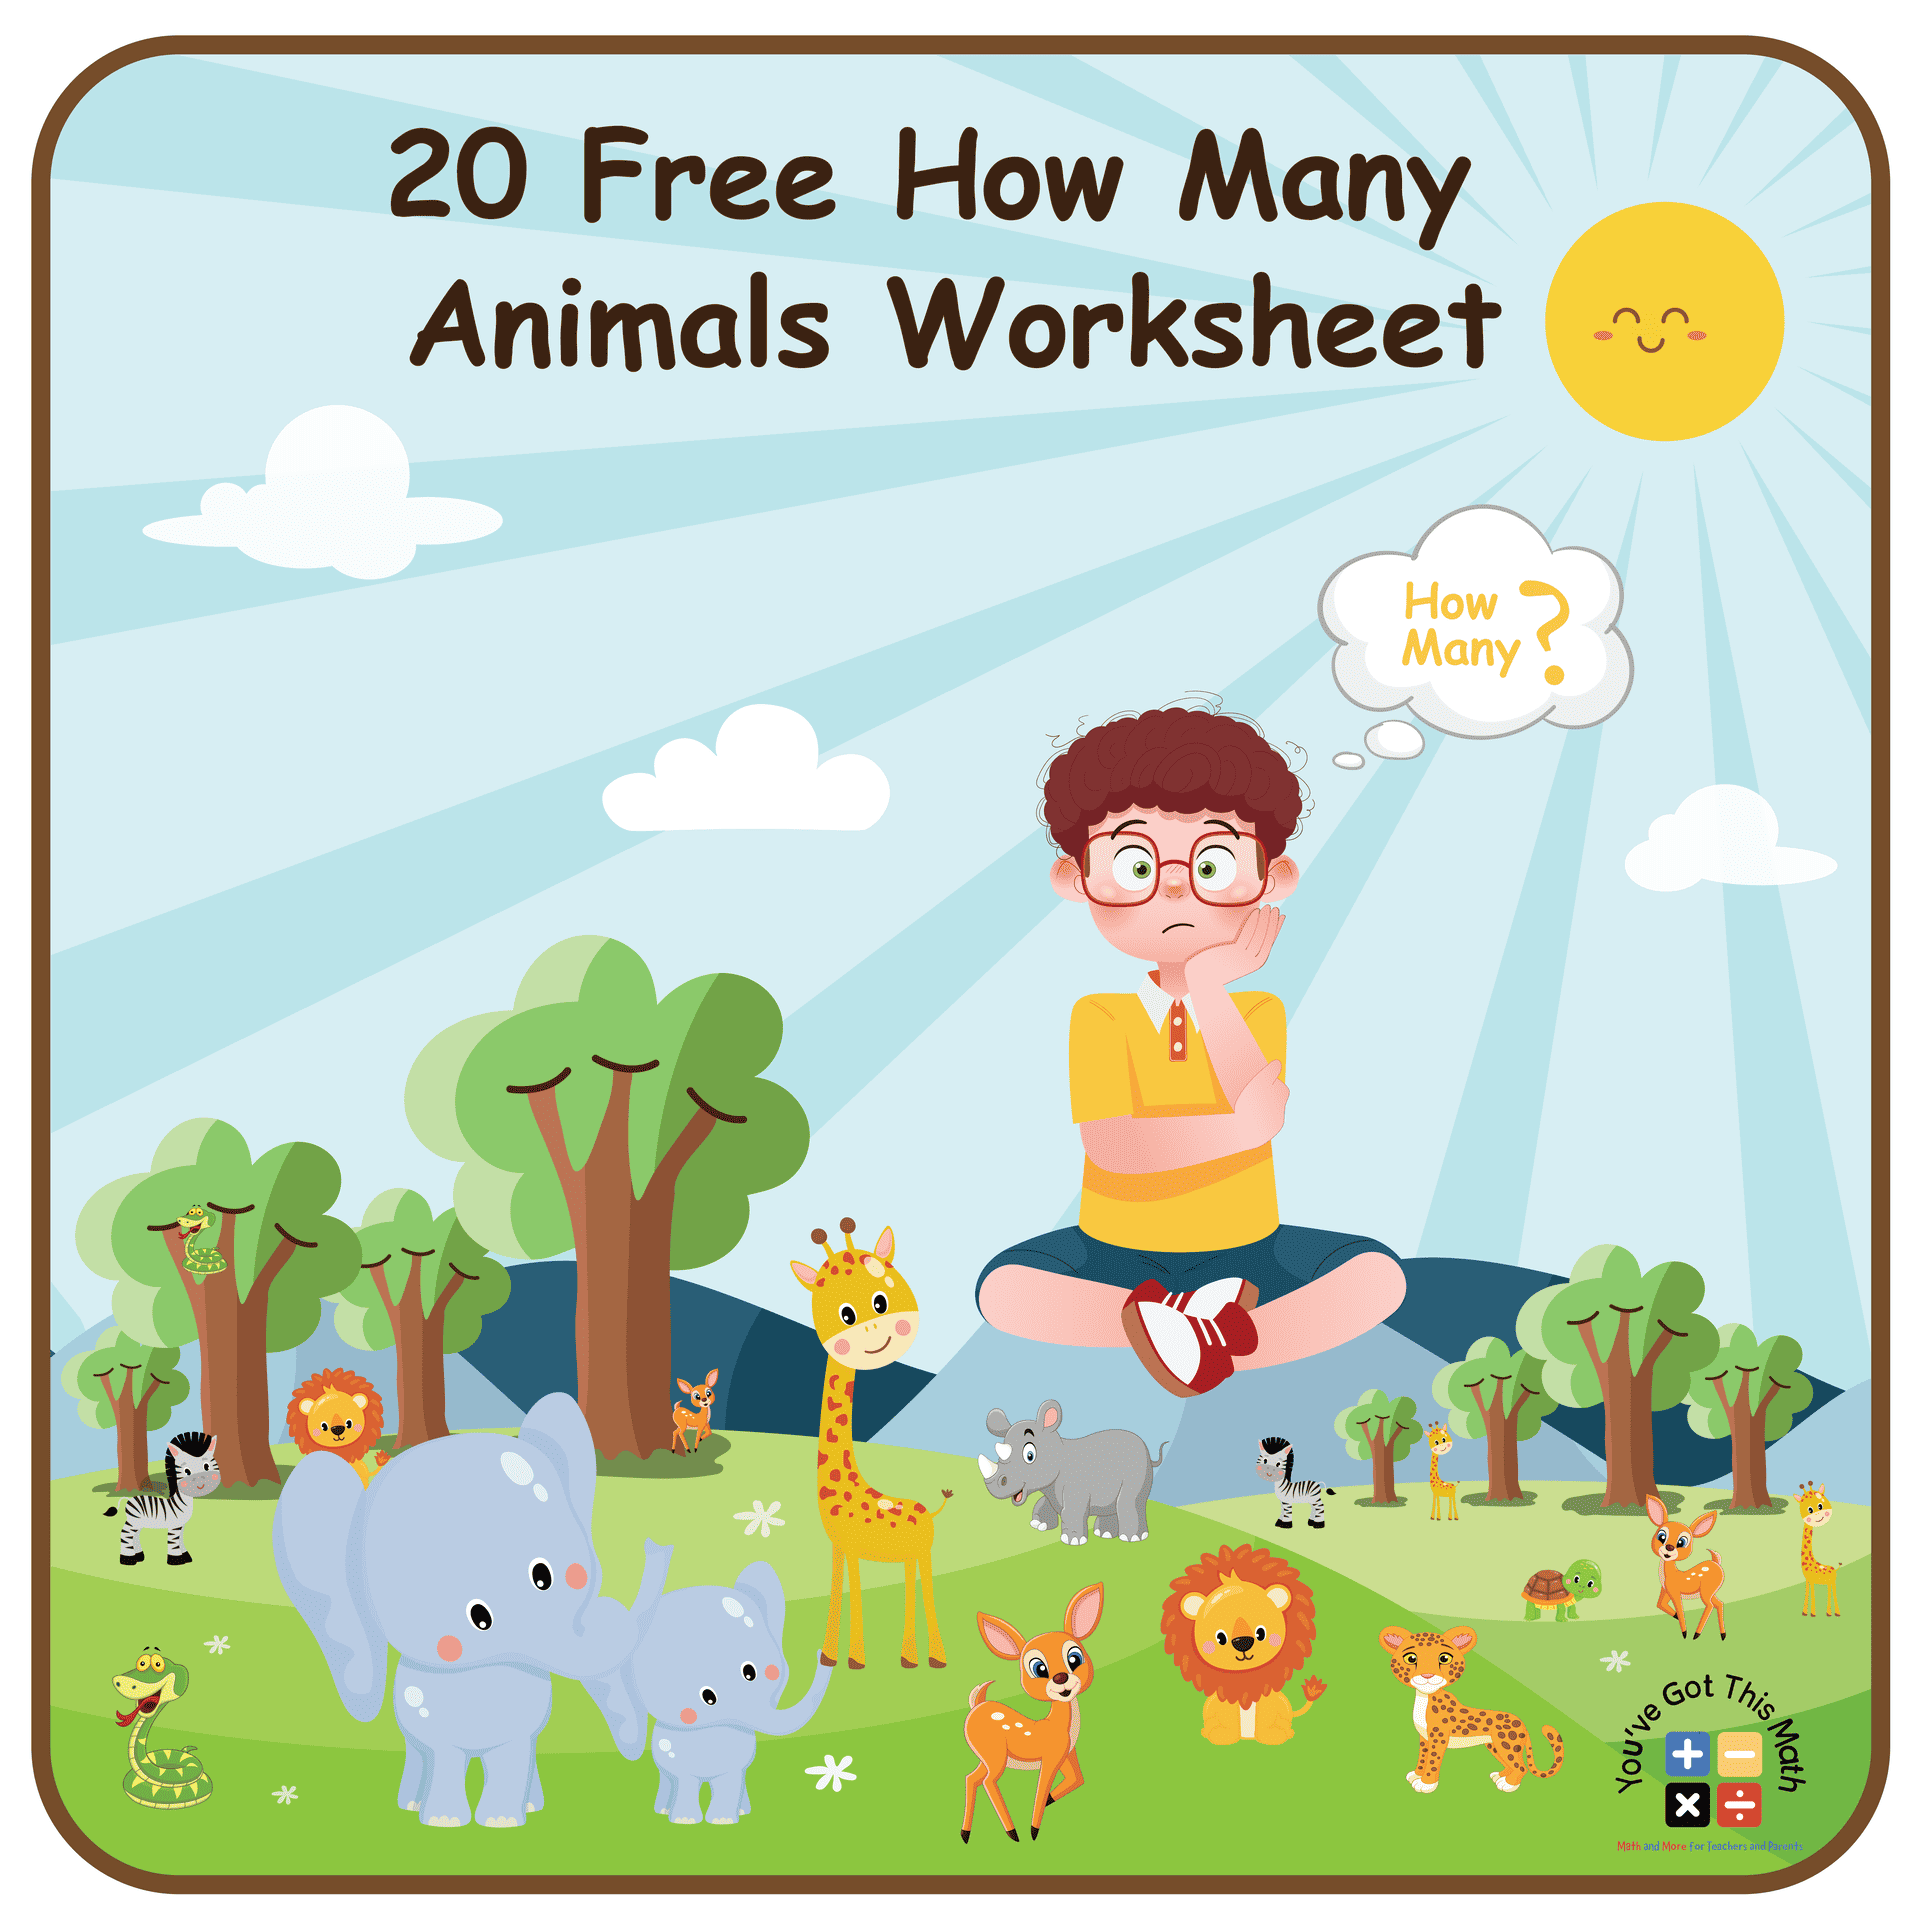 20 Free How Many Animals Worksheet